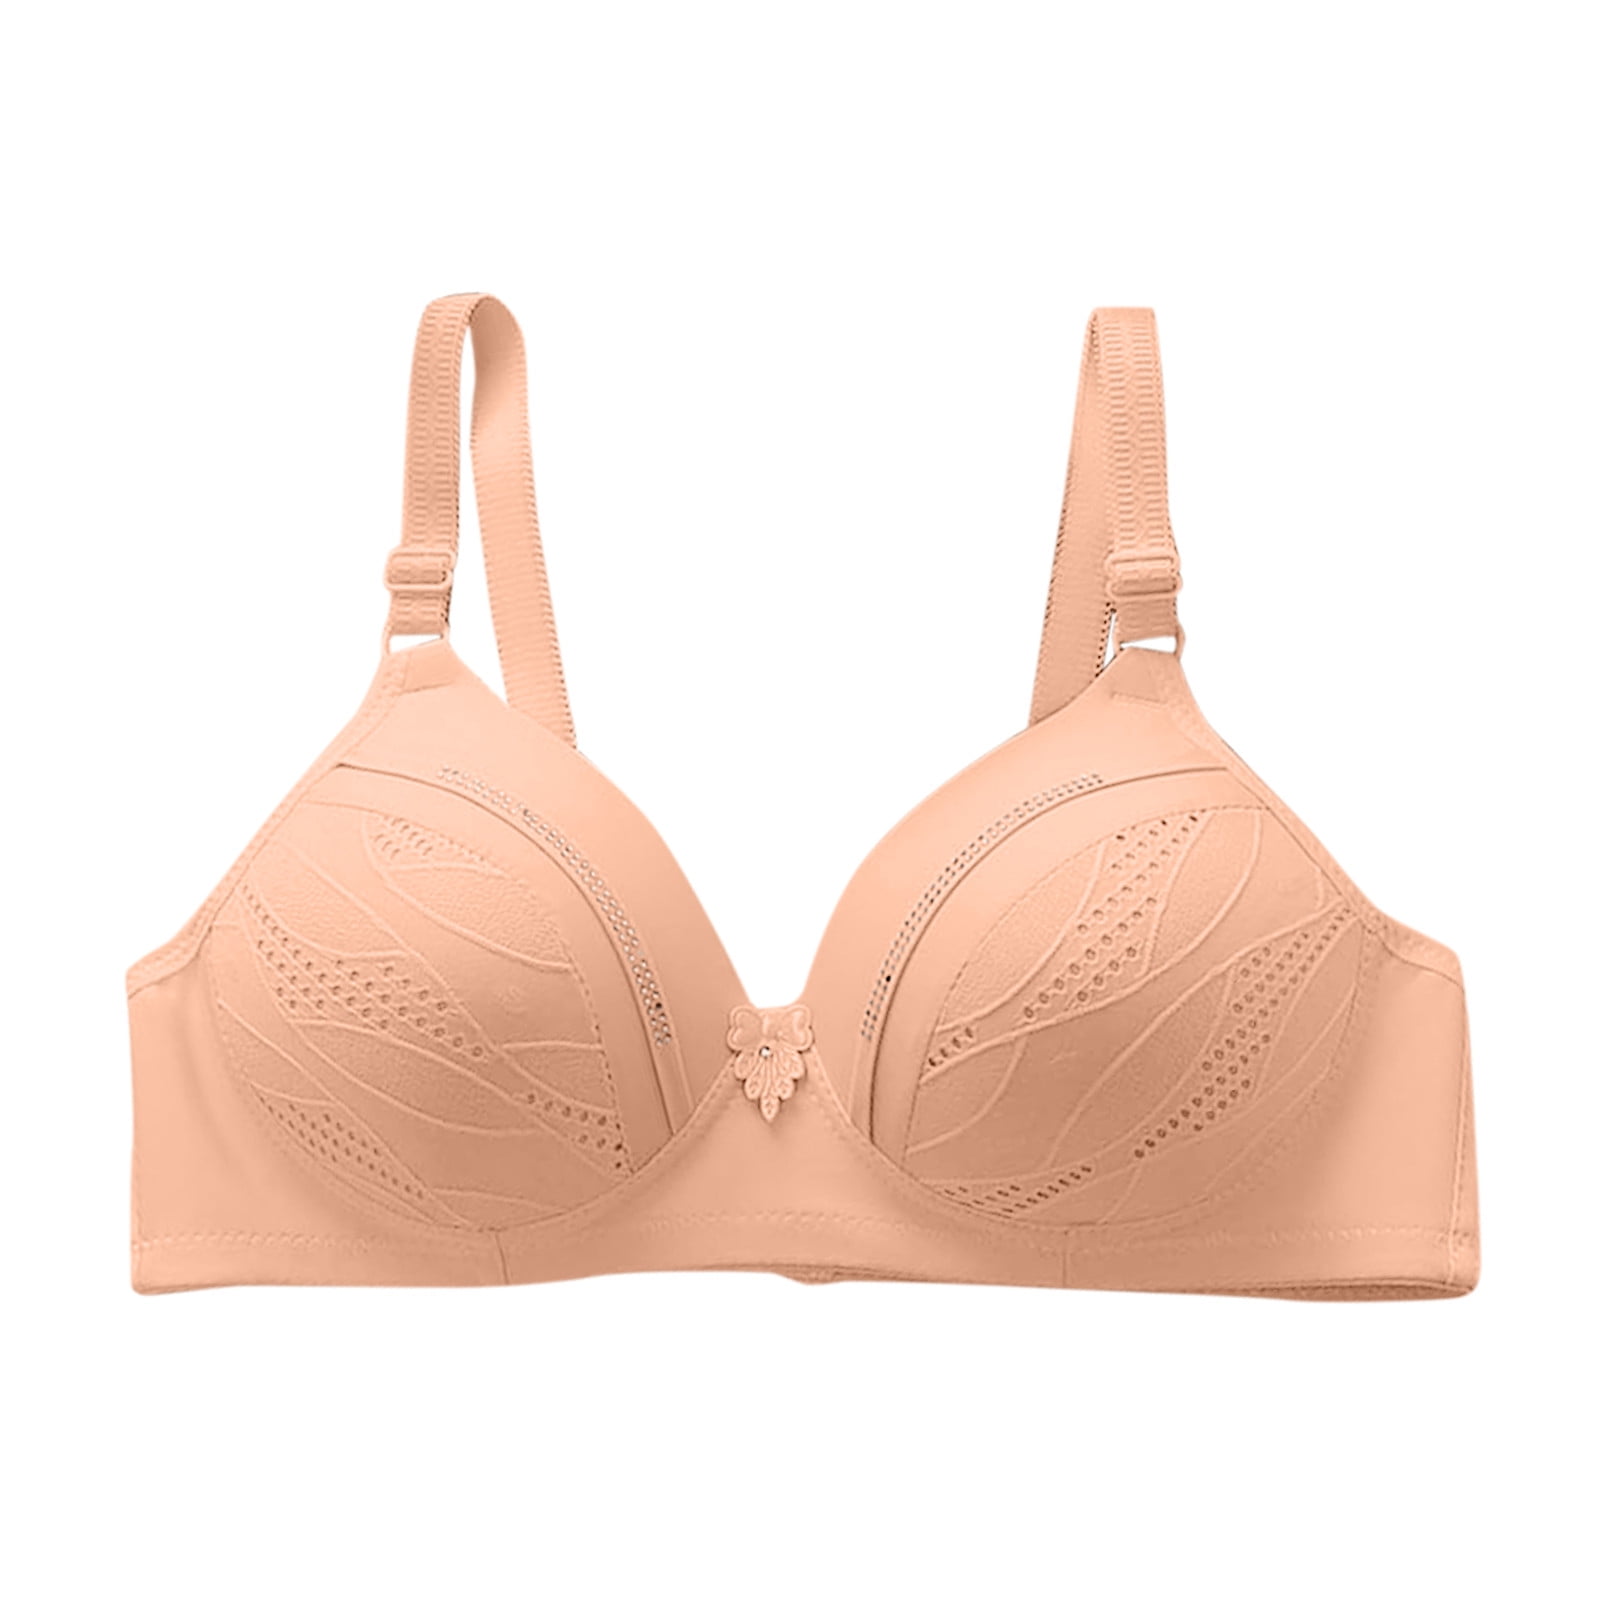 CAICJ98 Bras for Women Women Full Cup Thin Underwear Bra Plus Size Wireless  Adjustable Lace Bra L Lize Lace Bras Hot Pink,85C 